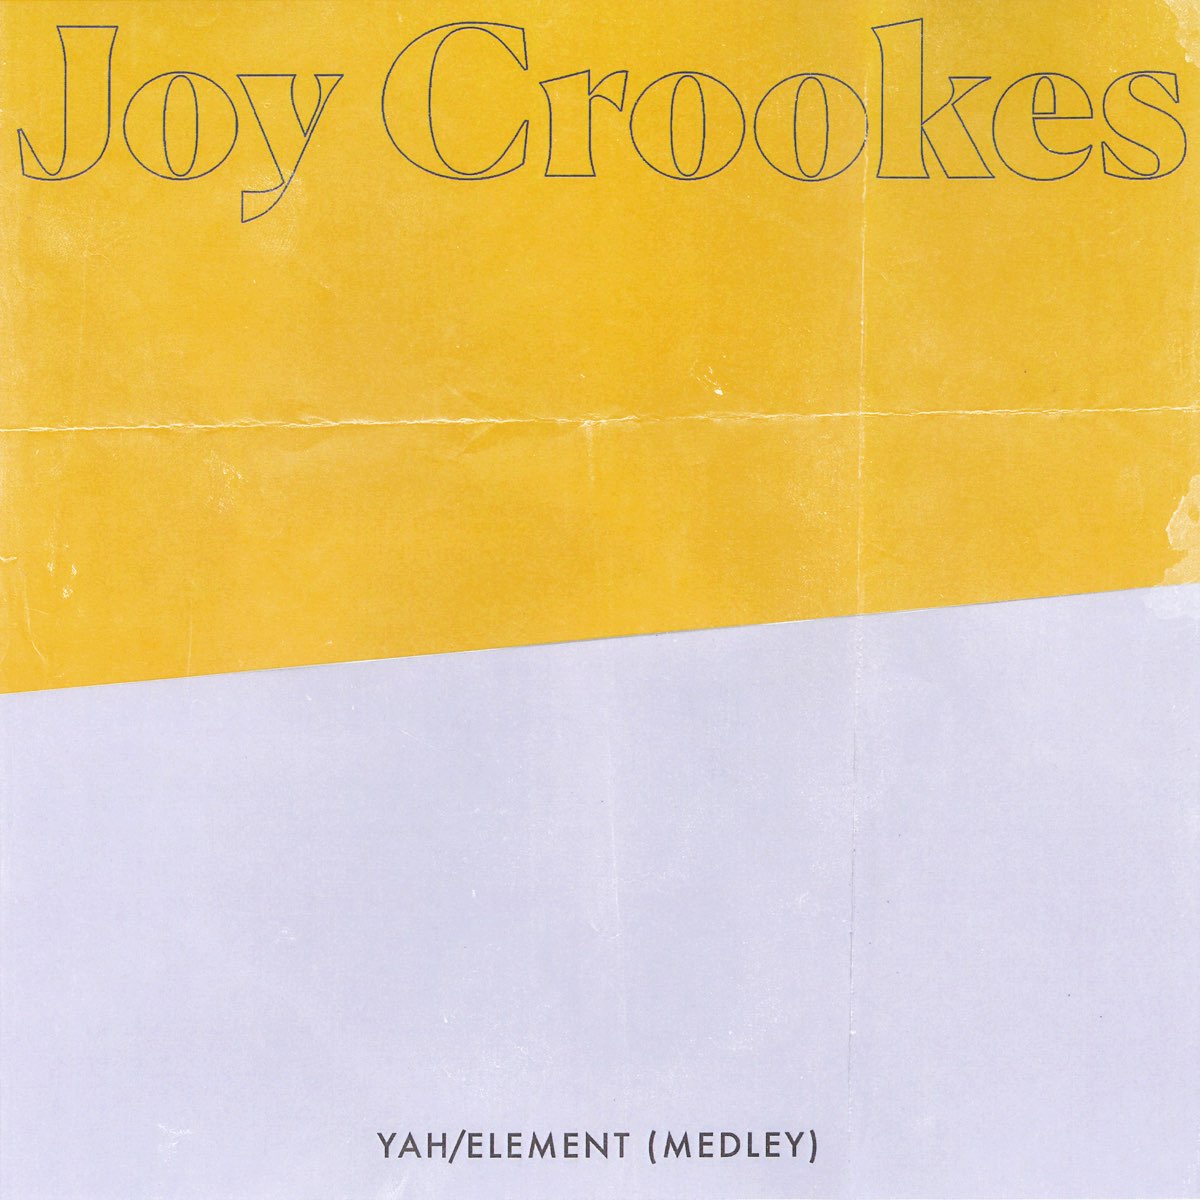 Art for Yah / Element (Medley) by Joy Crookes